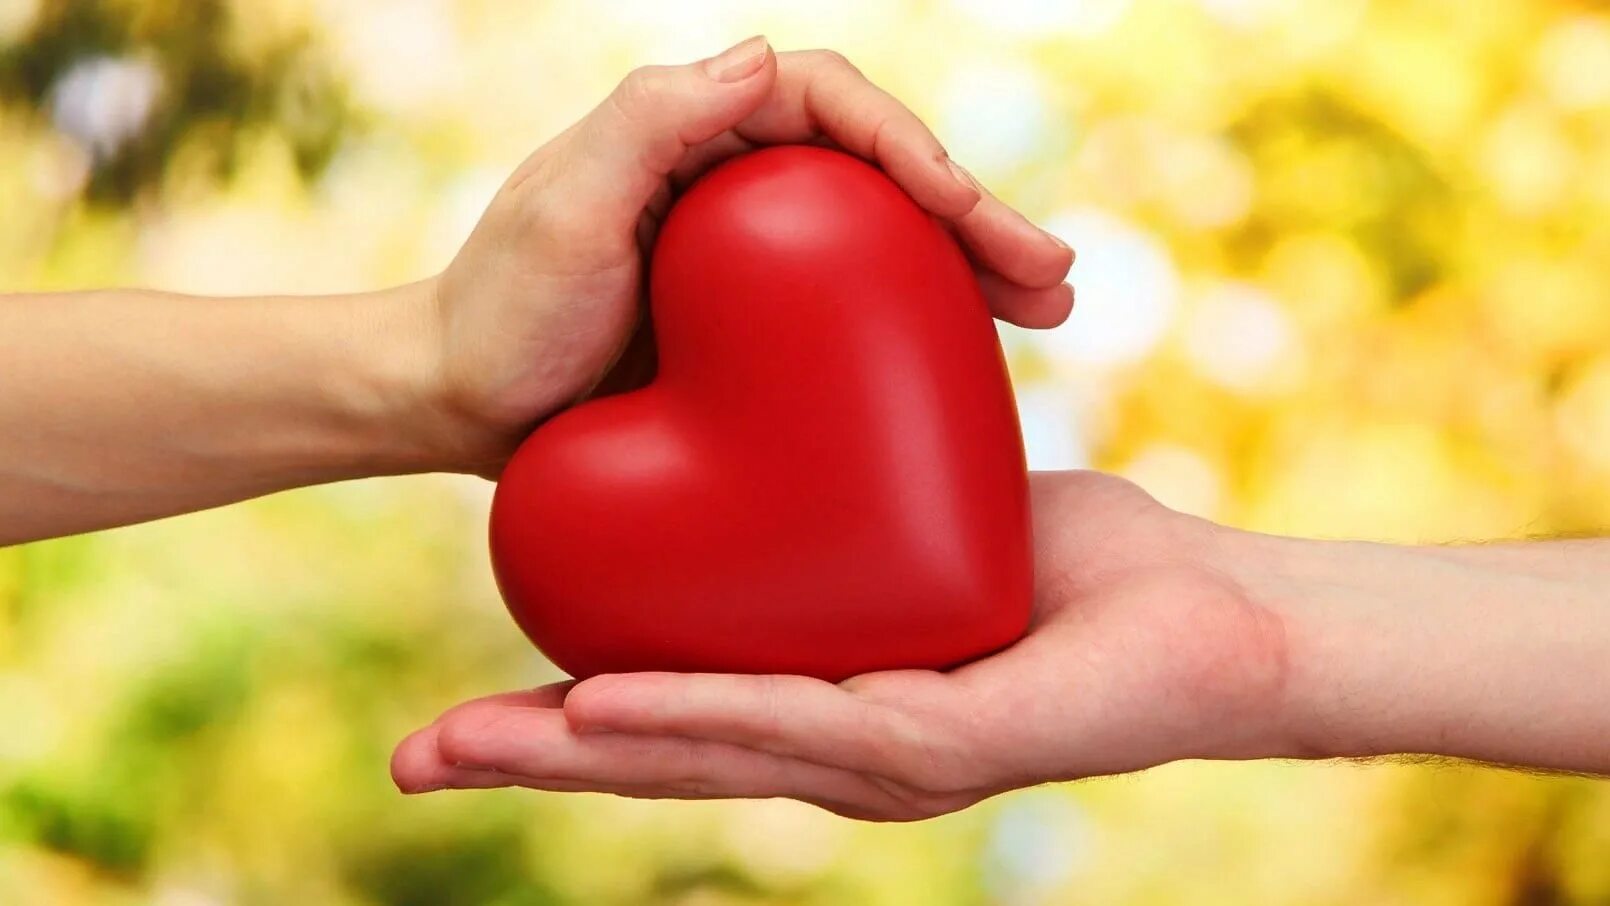 Сердце делай добро. Сердце в руках. Сердечко руками. Наполни сердце добротой. Картинка сердечко в руках.